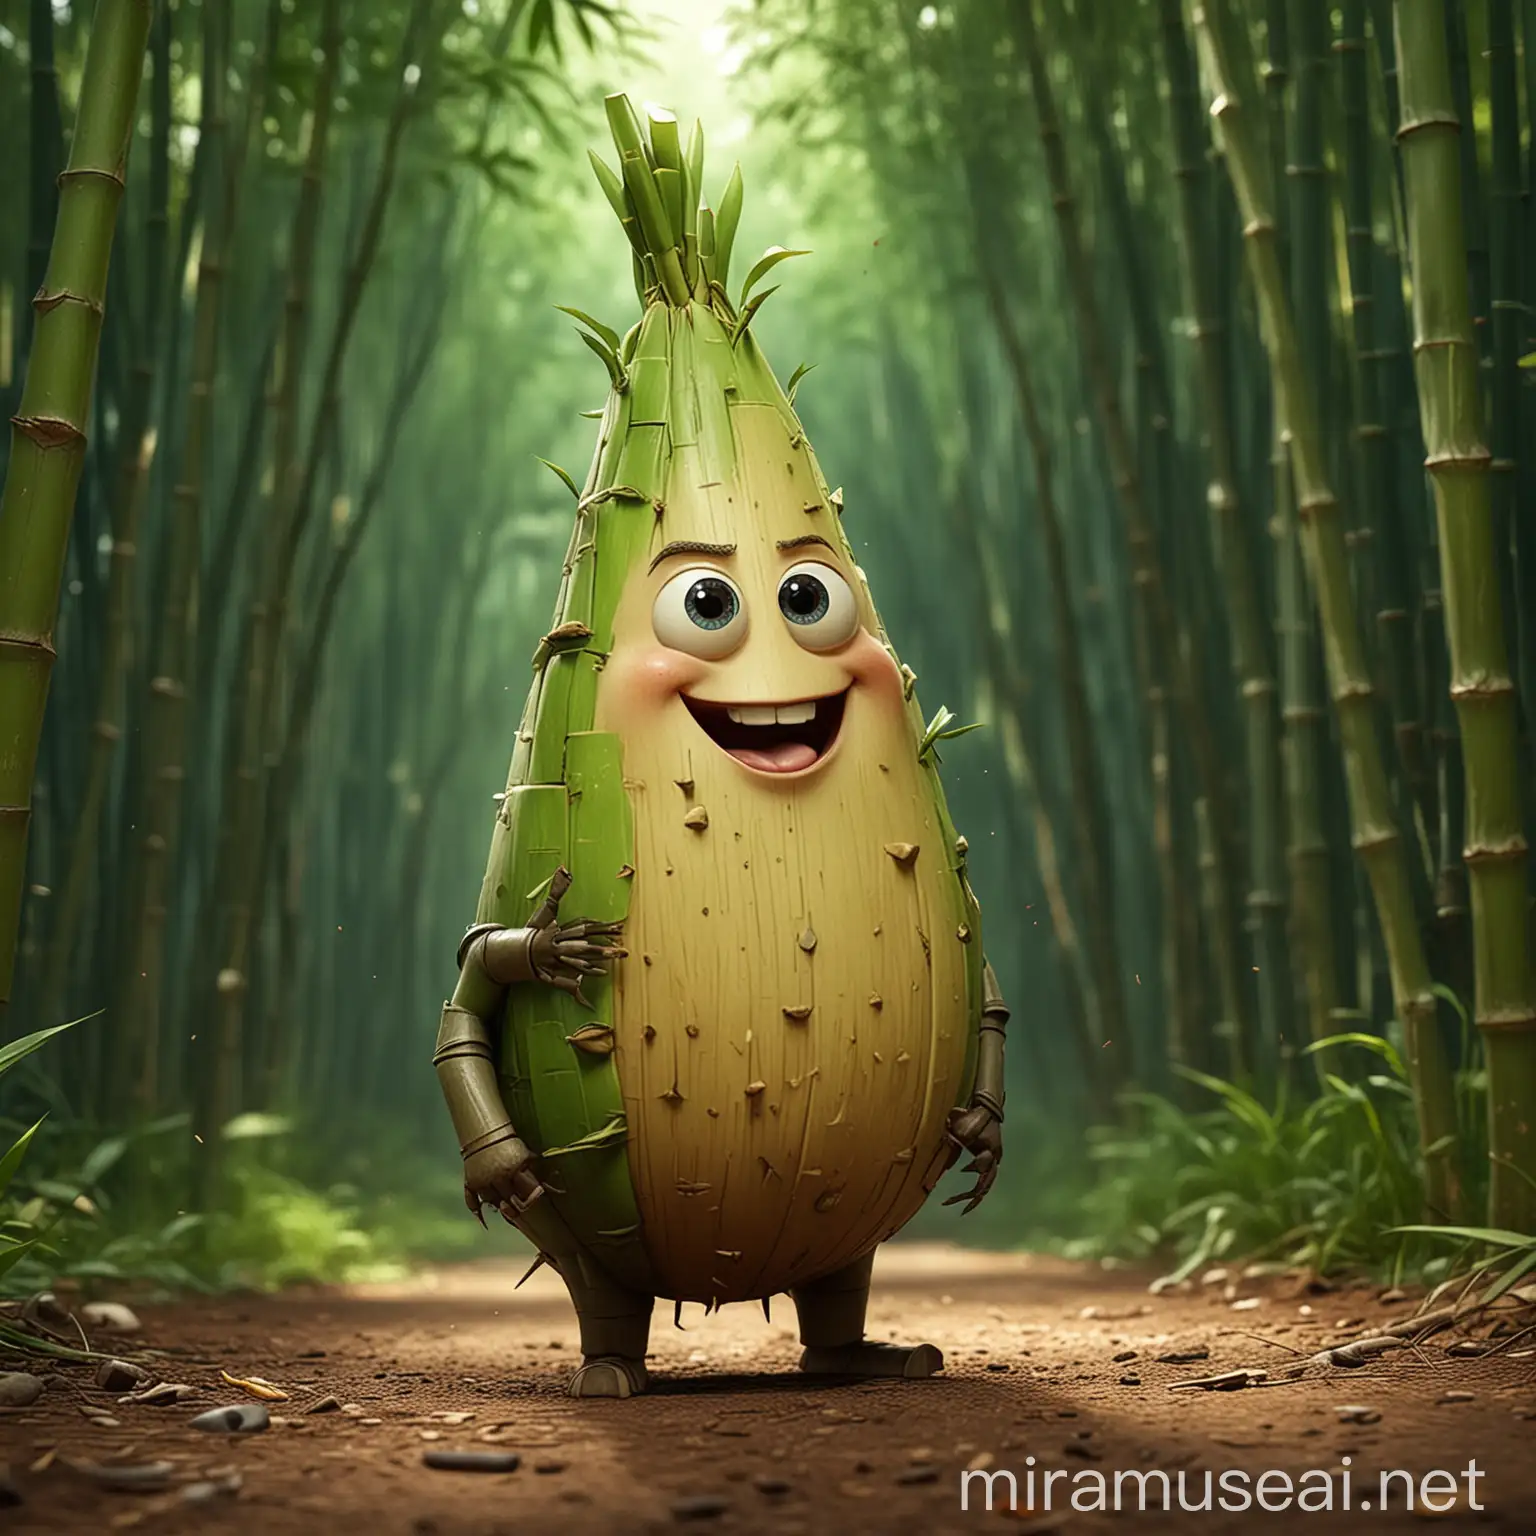 bamboo shoot ，pixar style